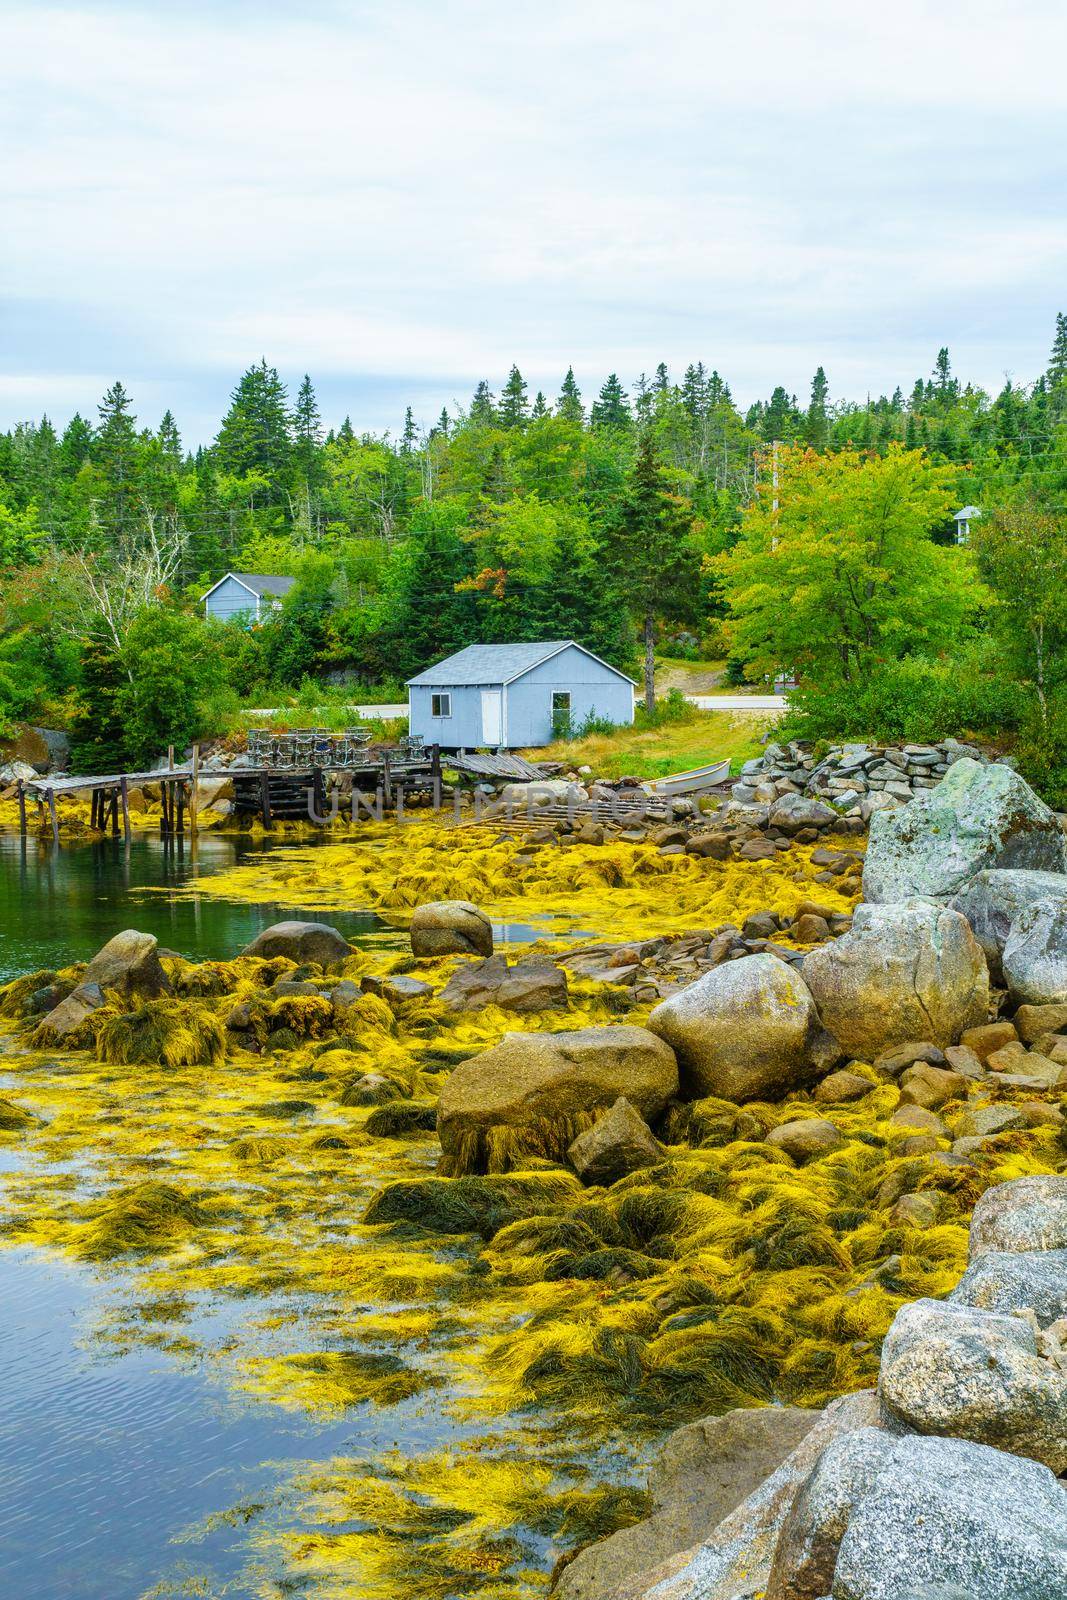 The fishing village Aspotogan, Nova Scotia by RnDmS